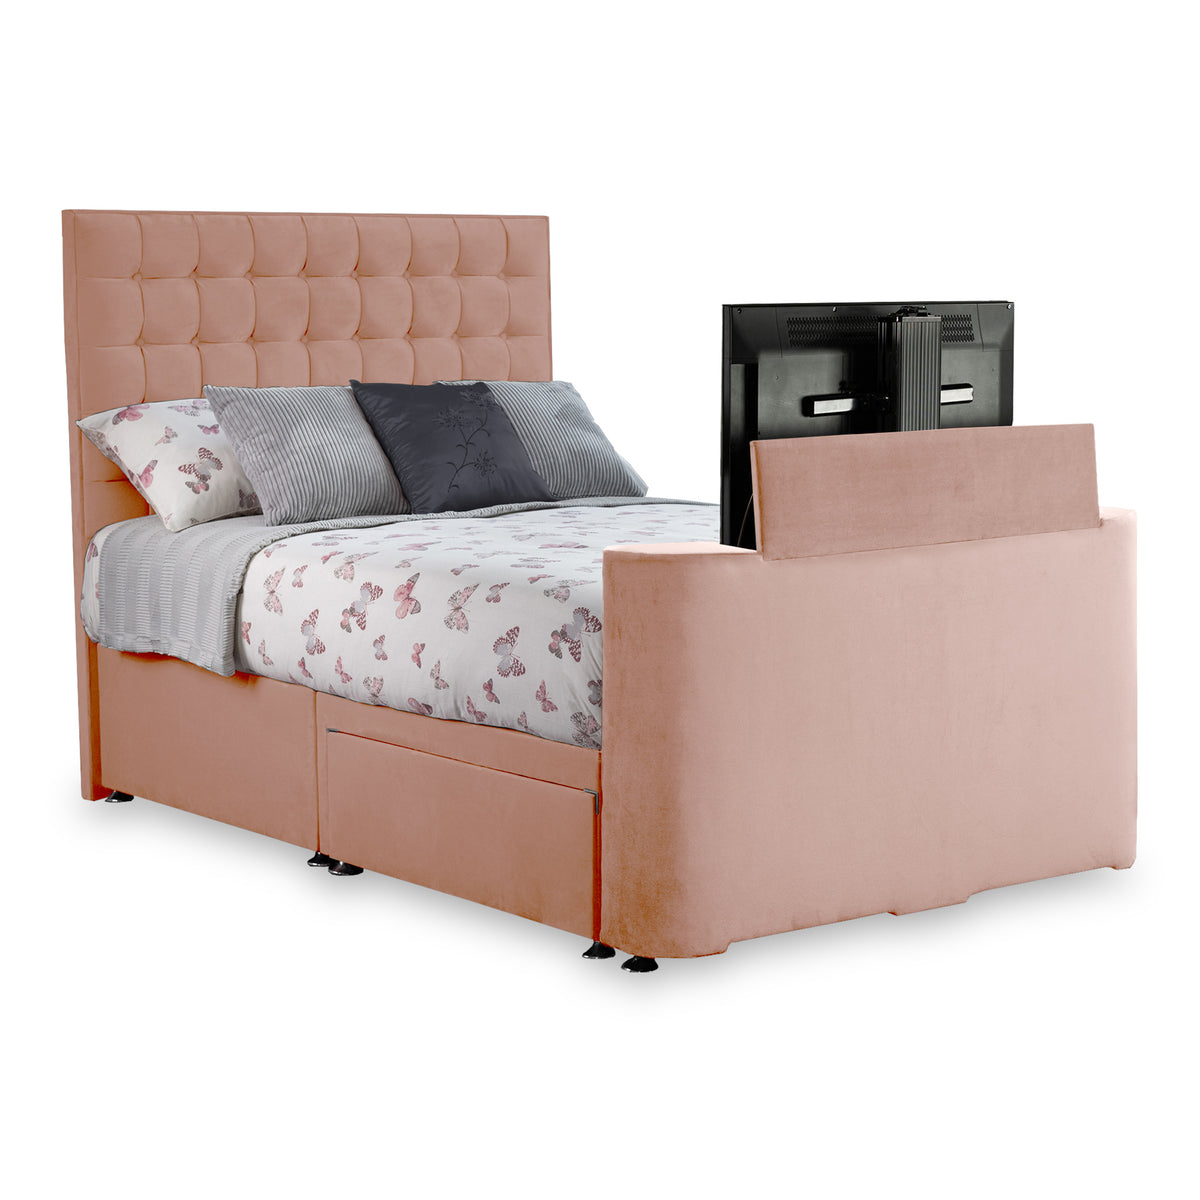 Bridgeford 2 Drawer TV Bed from Roseland Furniture